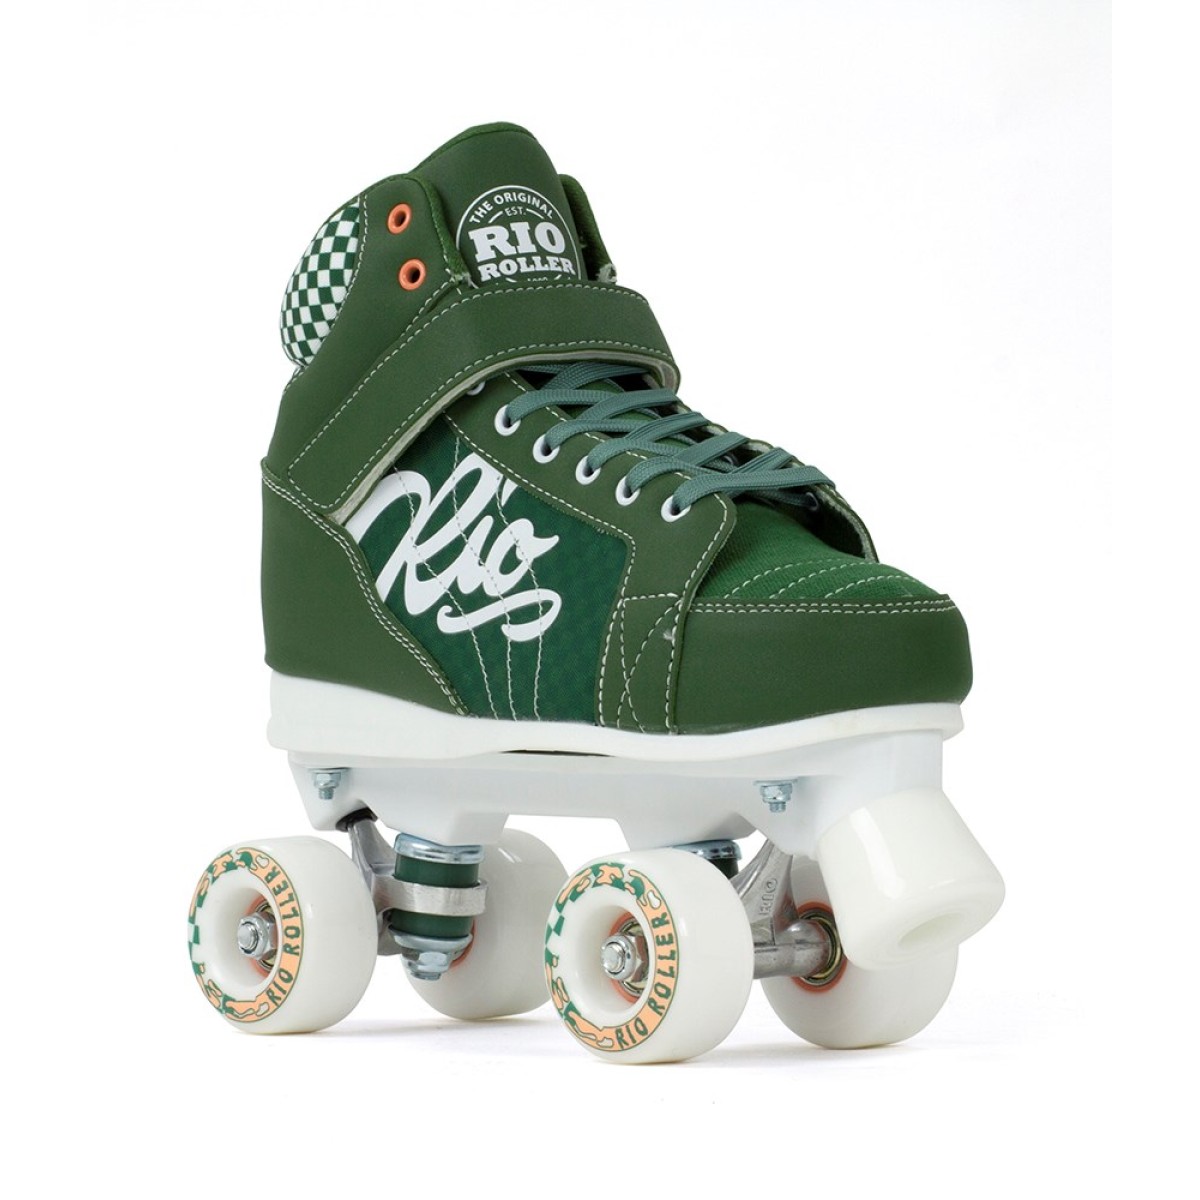 Quad skates Rior roller Mayhem II RIO ROLLER - view 9